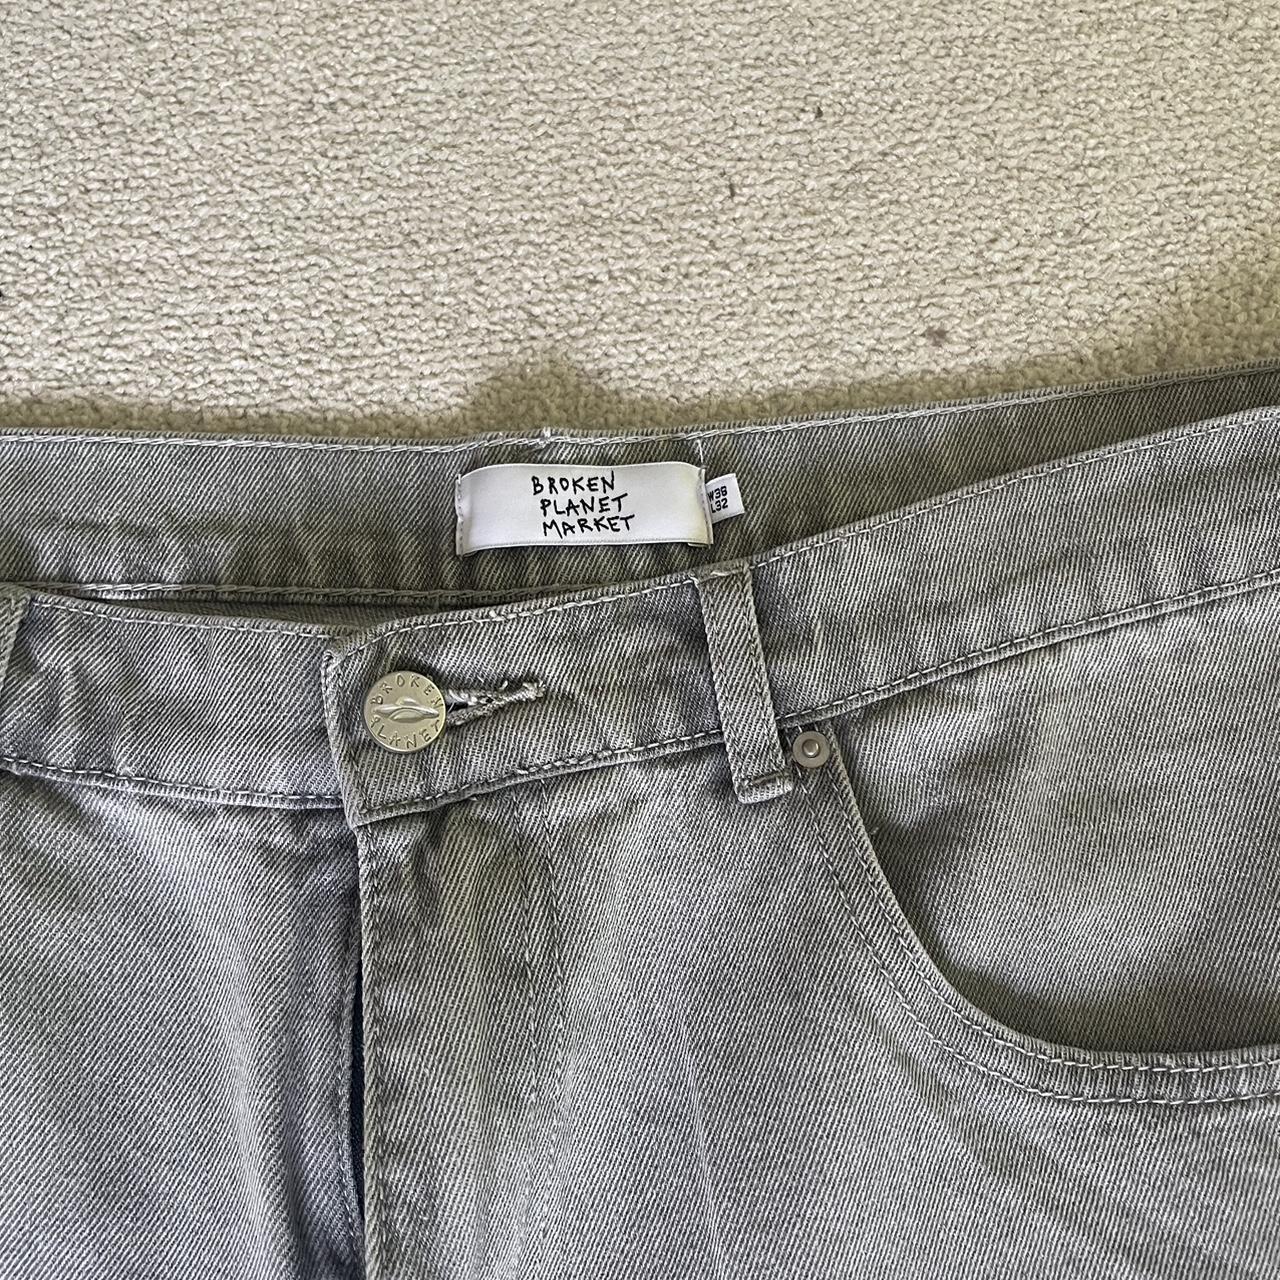 Broken Planet Market multi star jeans in washed grey... - Depop